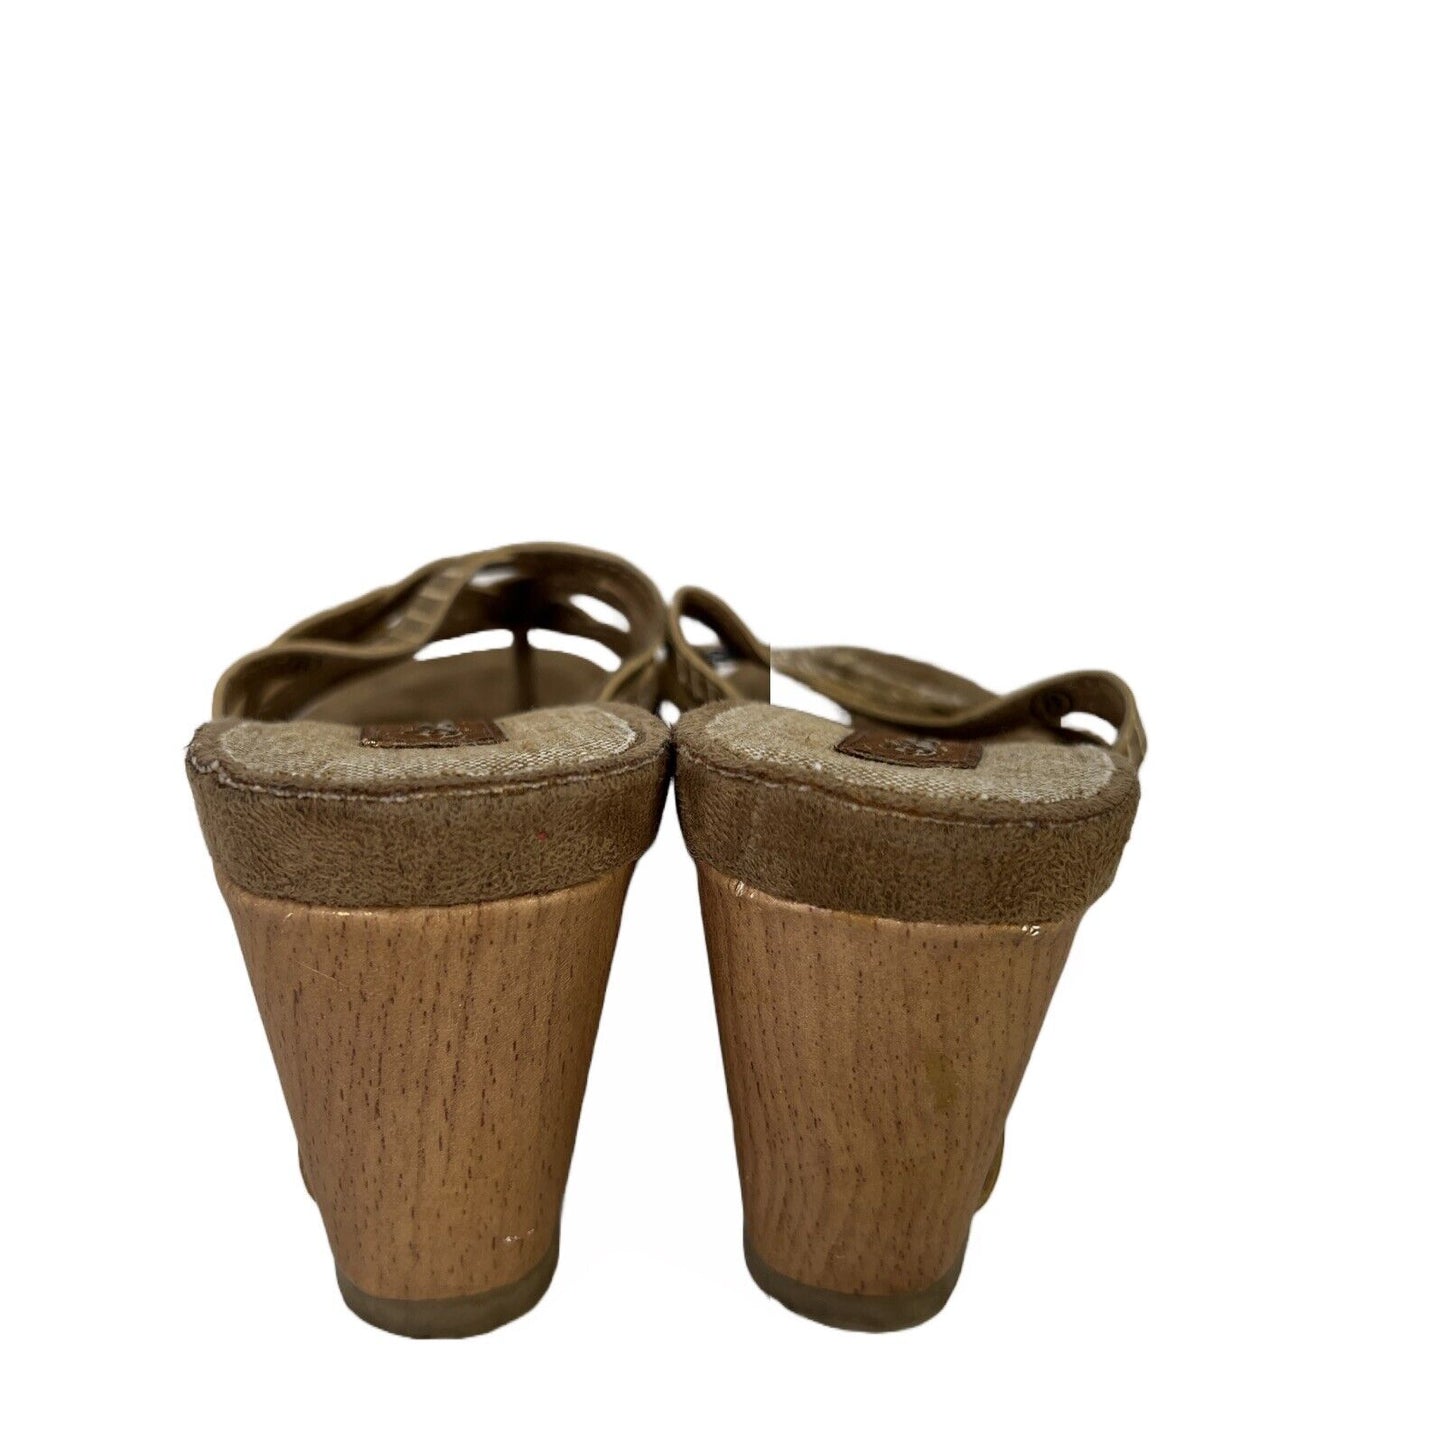 Skechers Women's Tan/Brown Strappy Wedge Sandals - 8